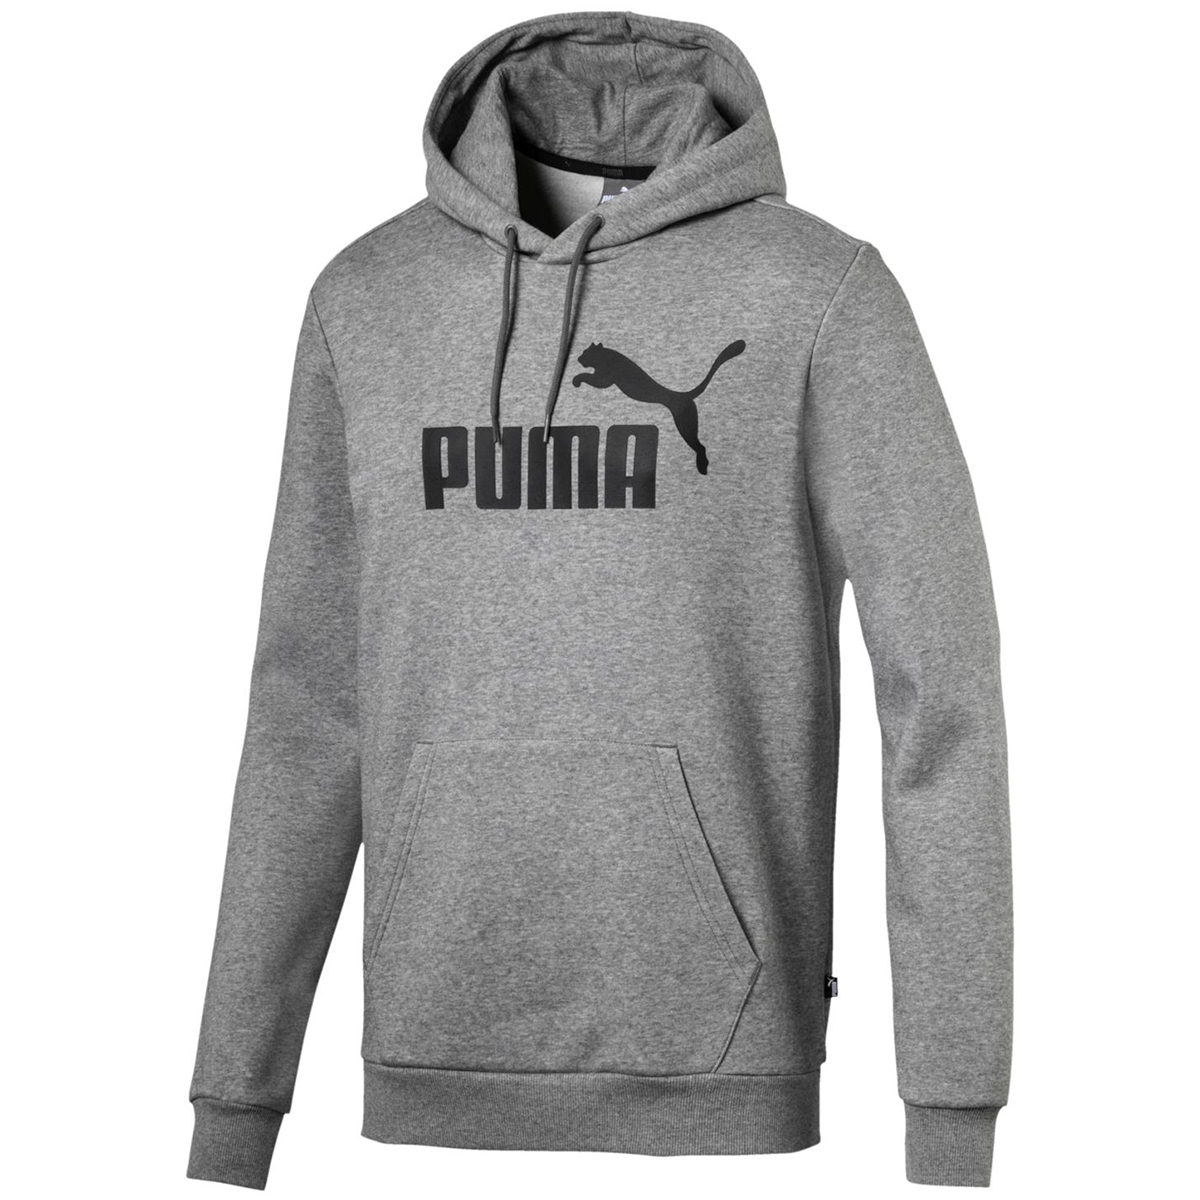 Puma Men's Essentials Fleece Pullover Hoodie - Black, L